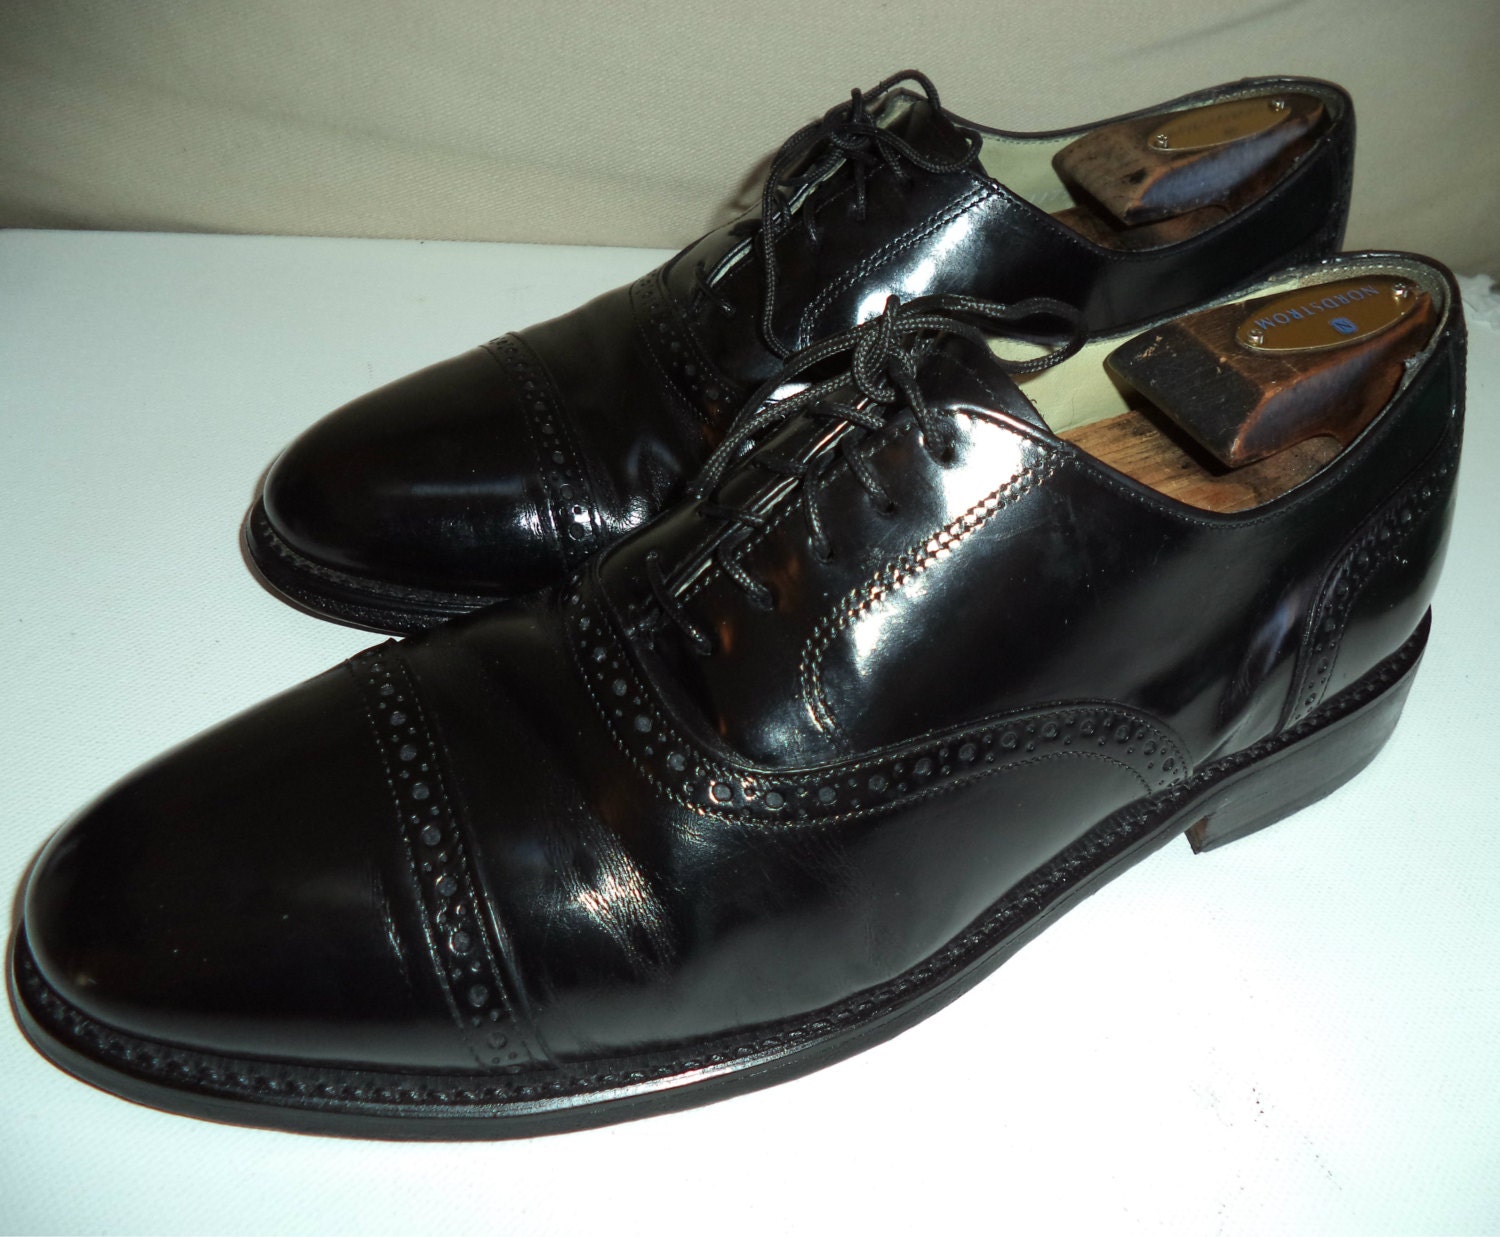 Size 9 Men's Bostonian Shoes Black Wing Tip by Insideredo on Etsy